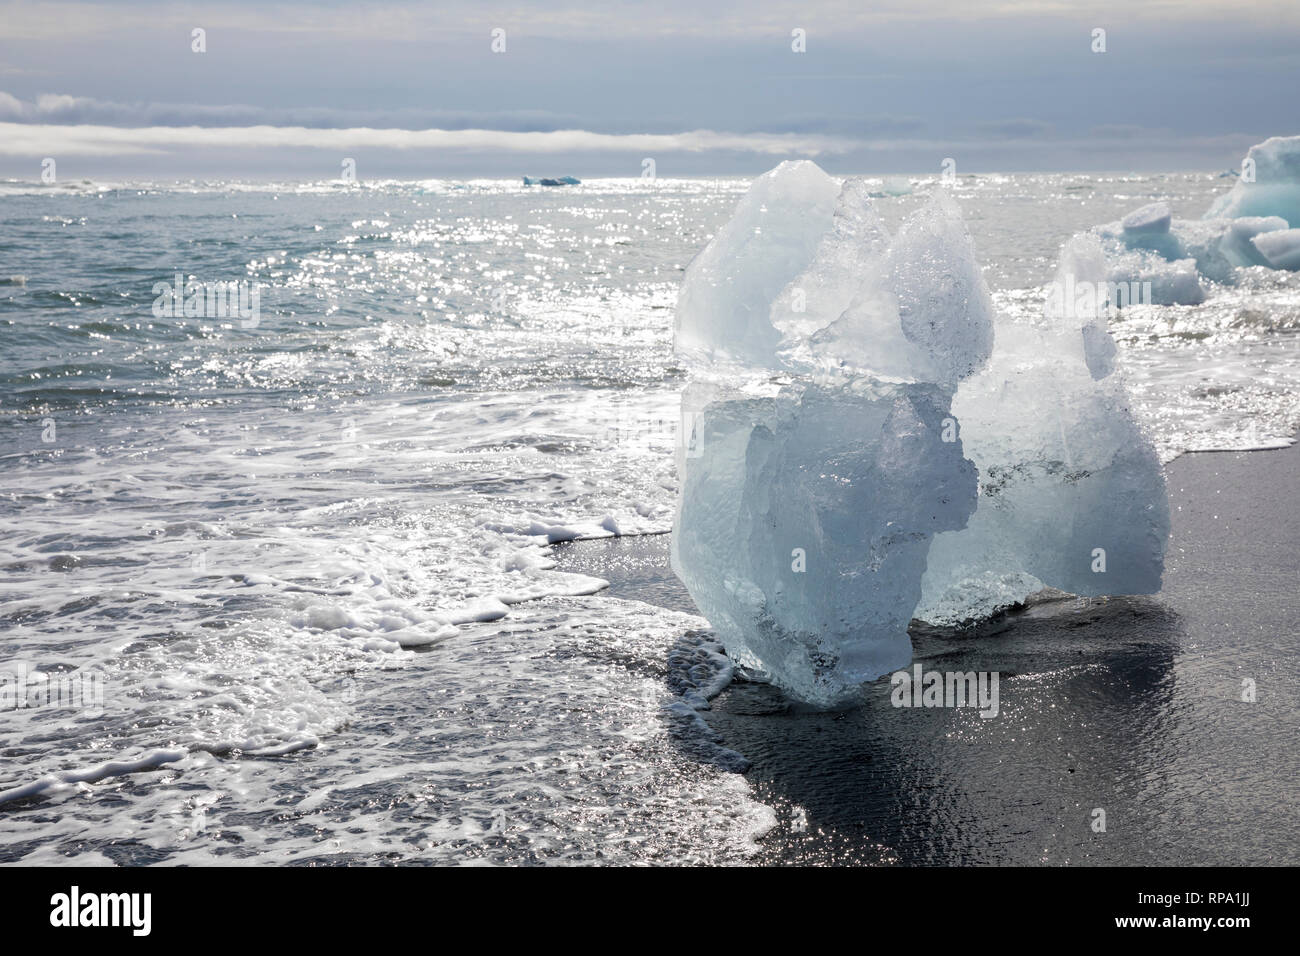 Eisbrocken im Meerwasser am Strand der Gletscherlagune Jökulsárlón, Jökulsarlon, Jokulsarlon, Diamandstrand, Eislagune, Lagune, mit Eis, Gletscher Stockfoto